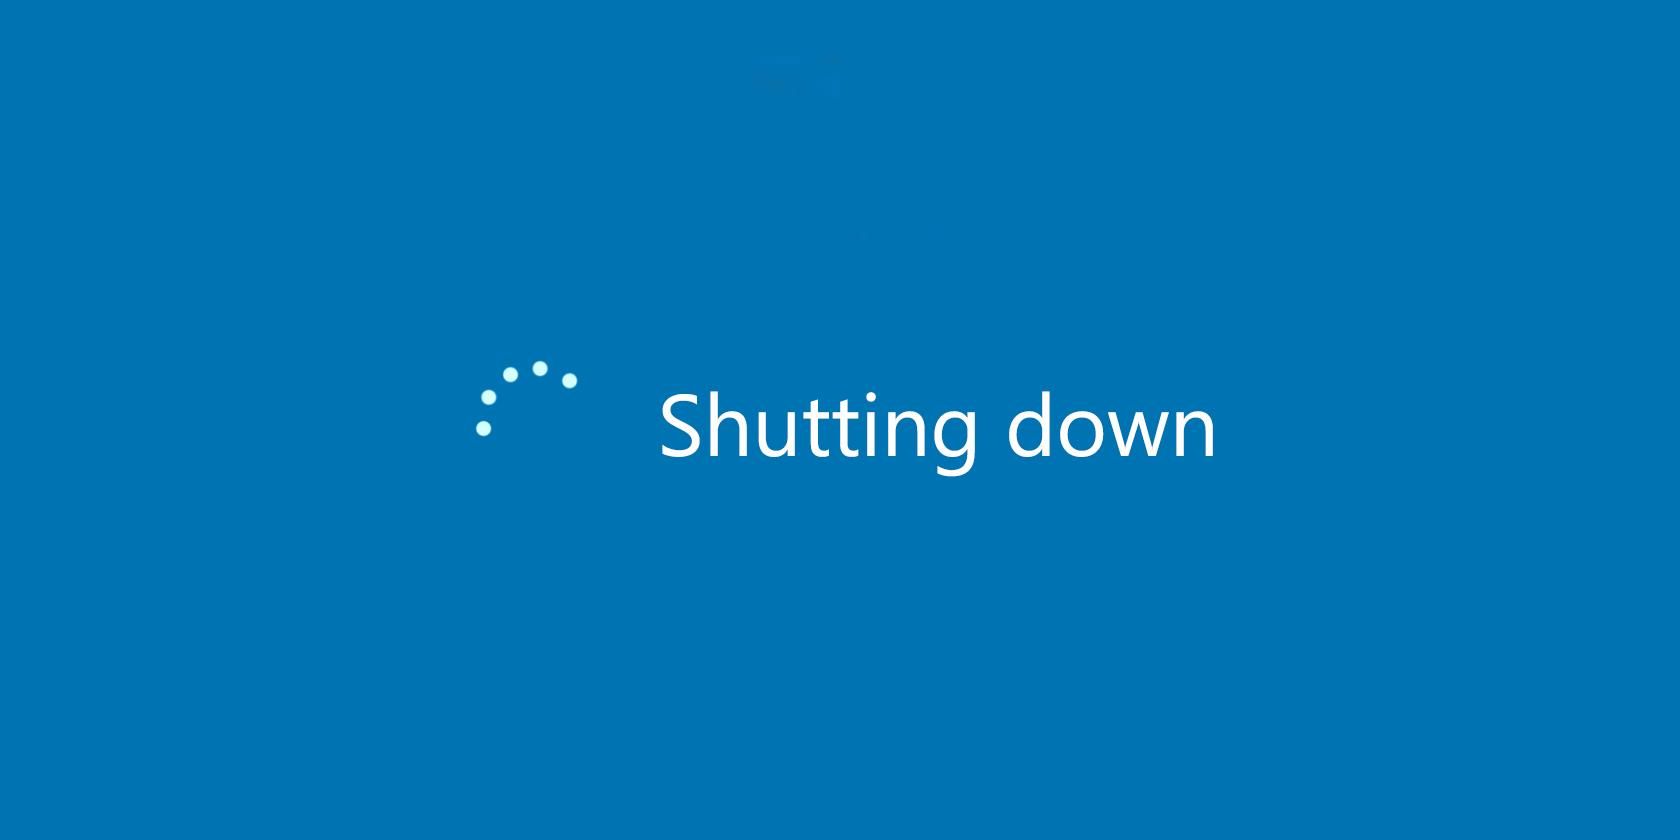 5 Ways to Shut Down or Sleep Windows 10/11 Using a Keyboard Shortcut